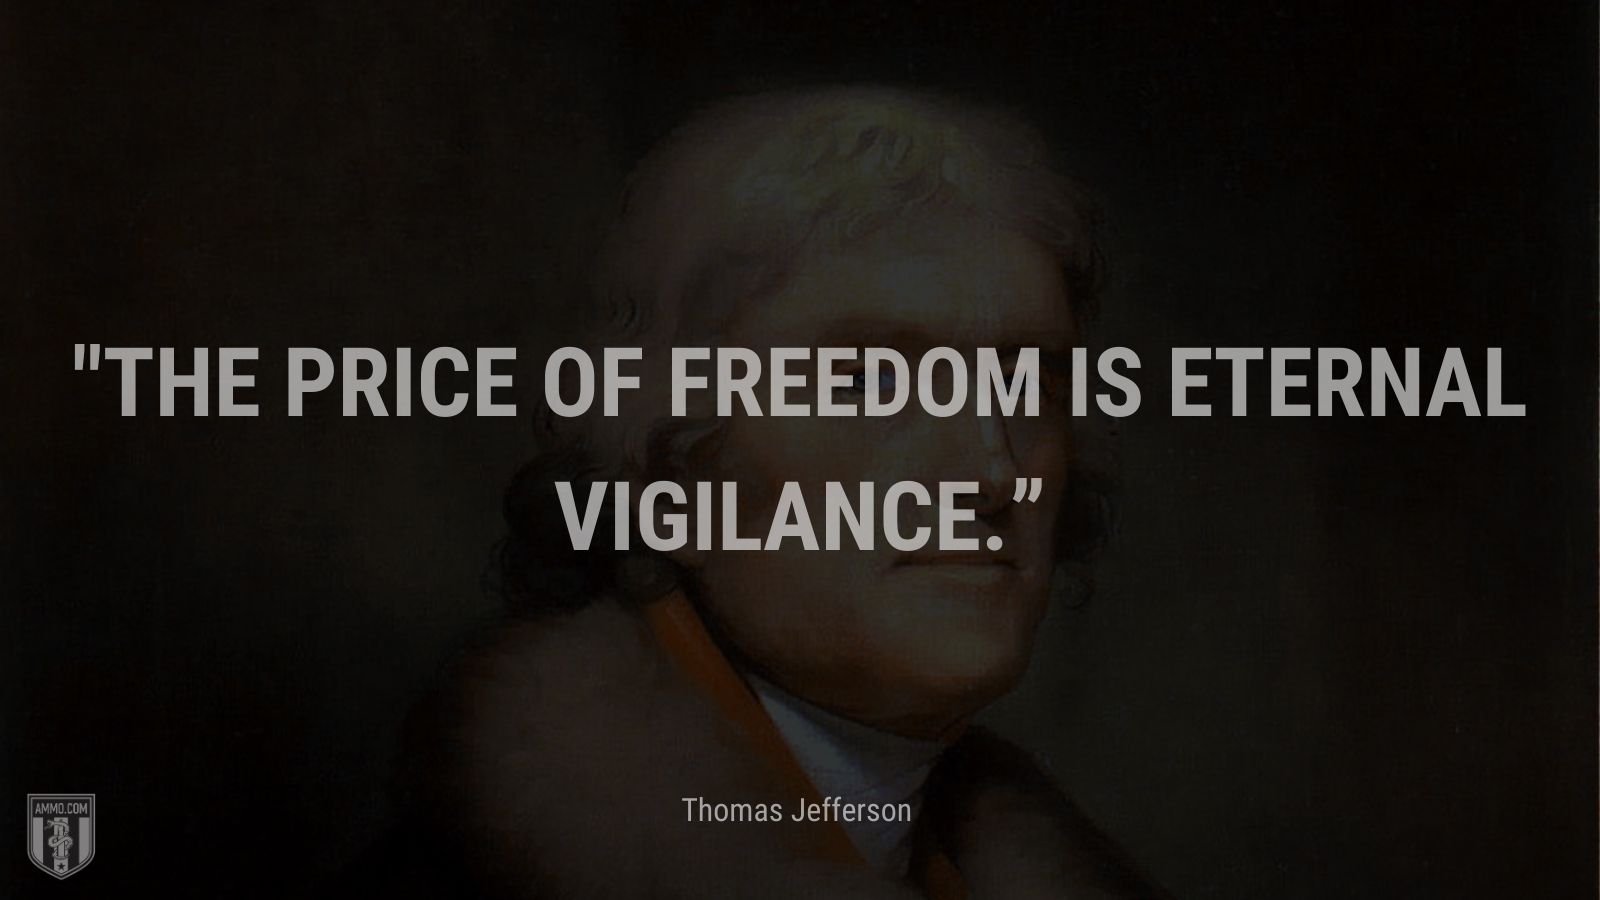 “The price of freedom is eternal vigilance.” - Thomas Jefferson